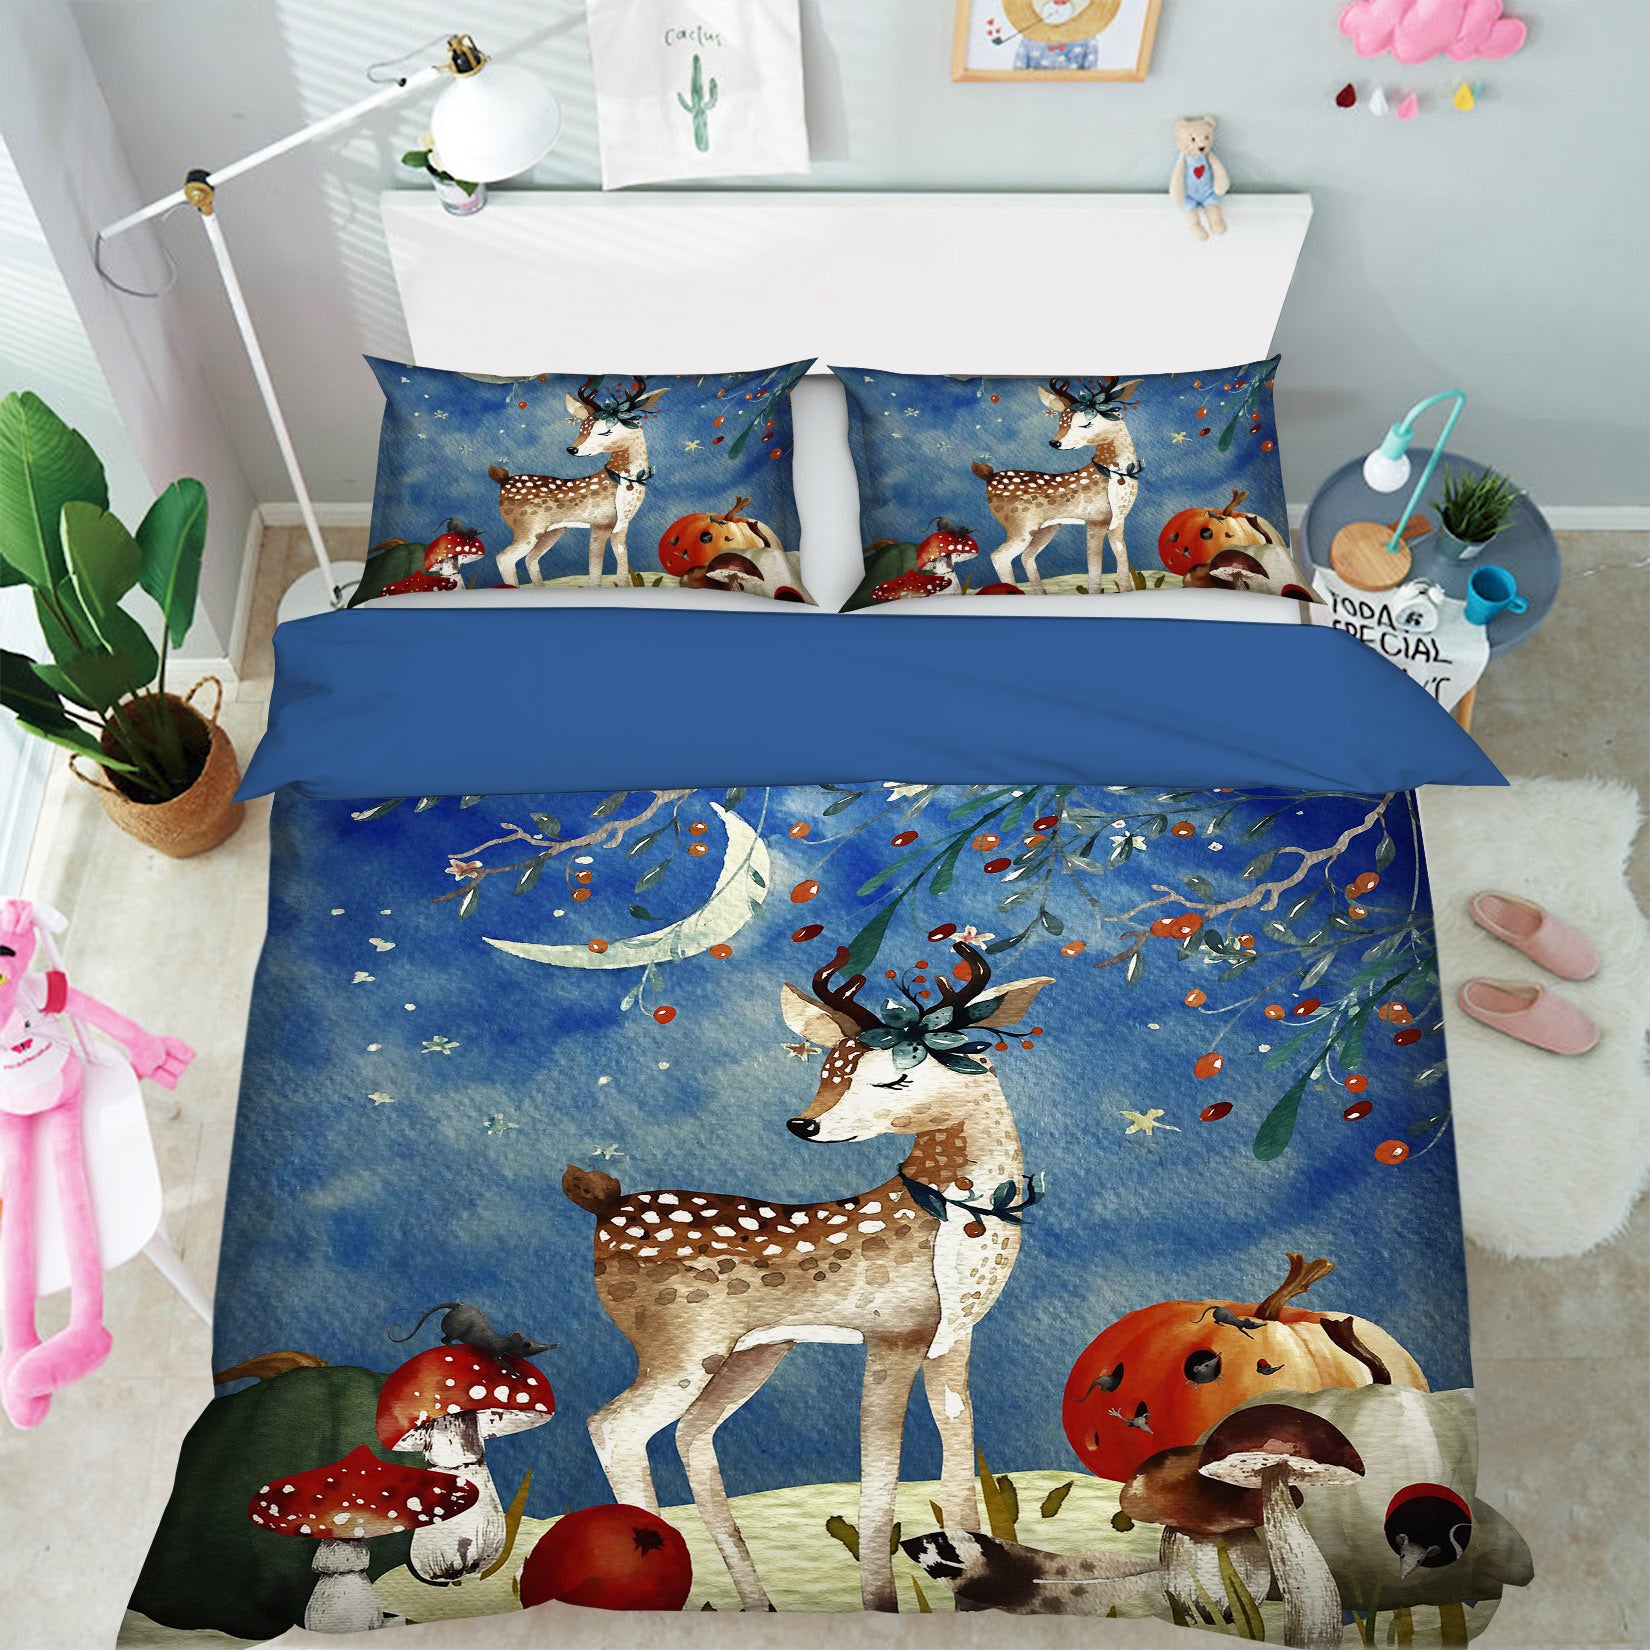 3D Sika Deer Mushroom 004 Uta Naumann Bedding Bed Pillowcases Quilt